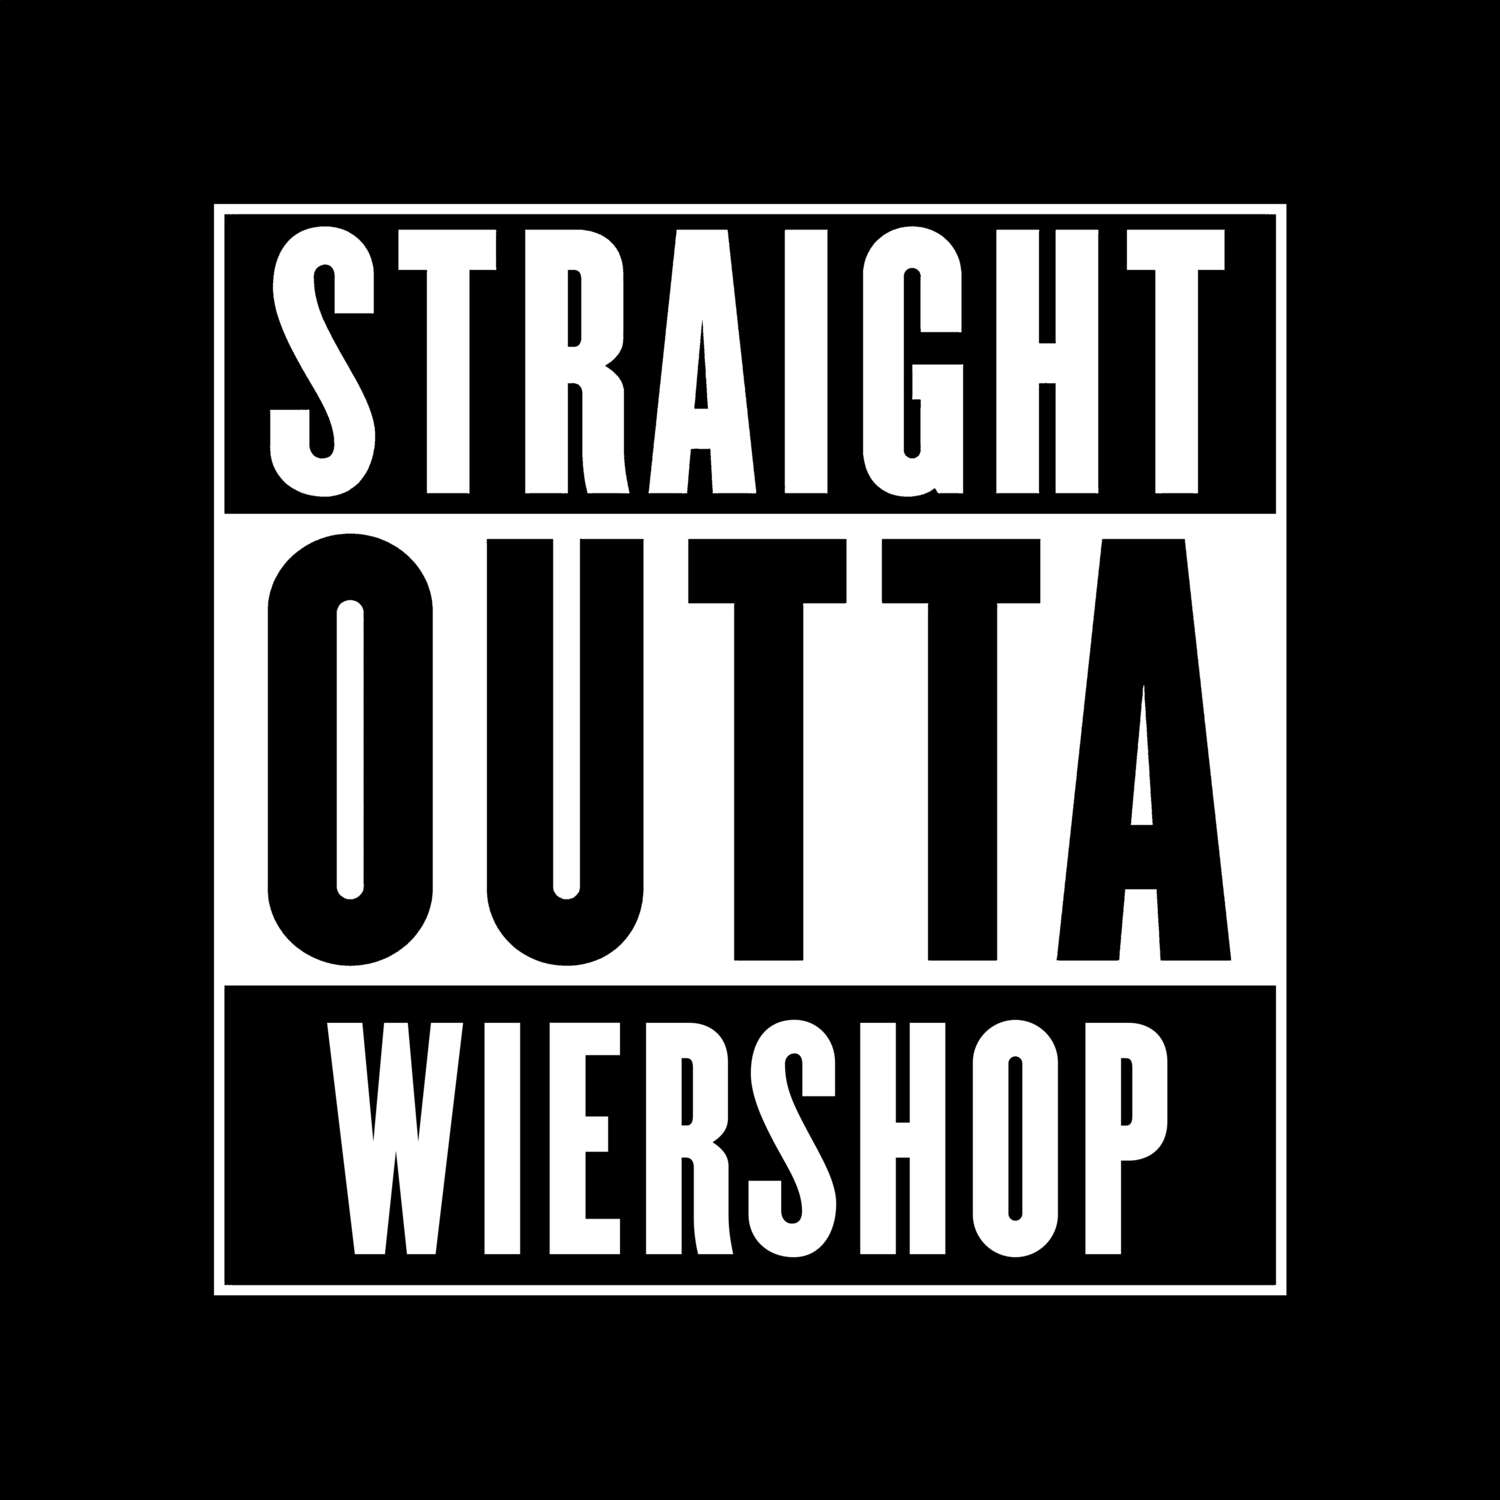 Wiershop T-Shirt »Straight Outta«